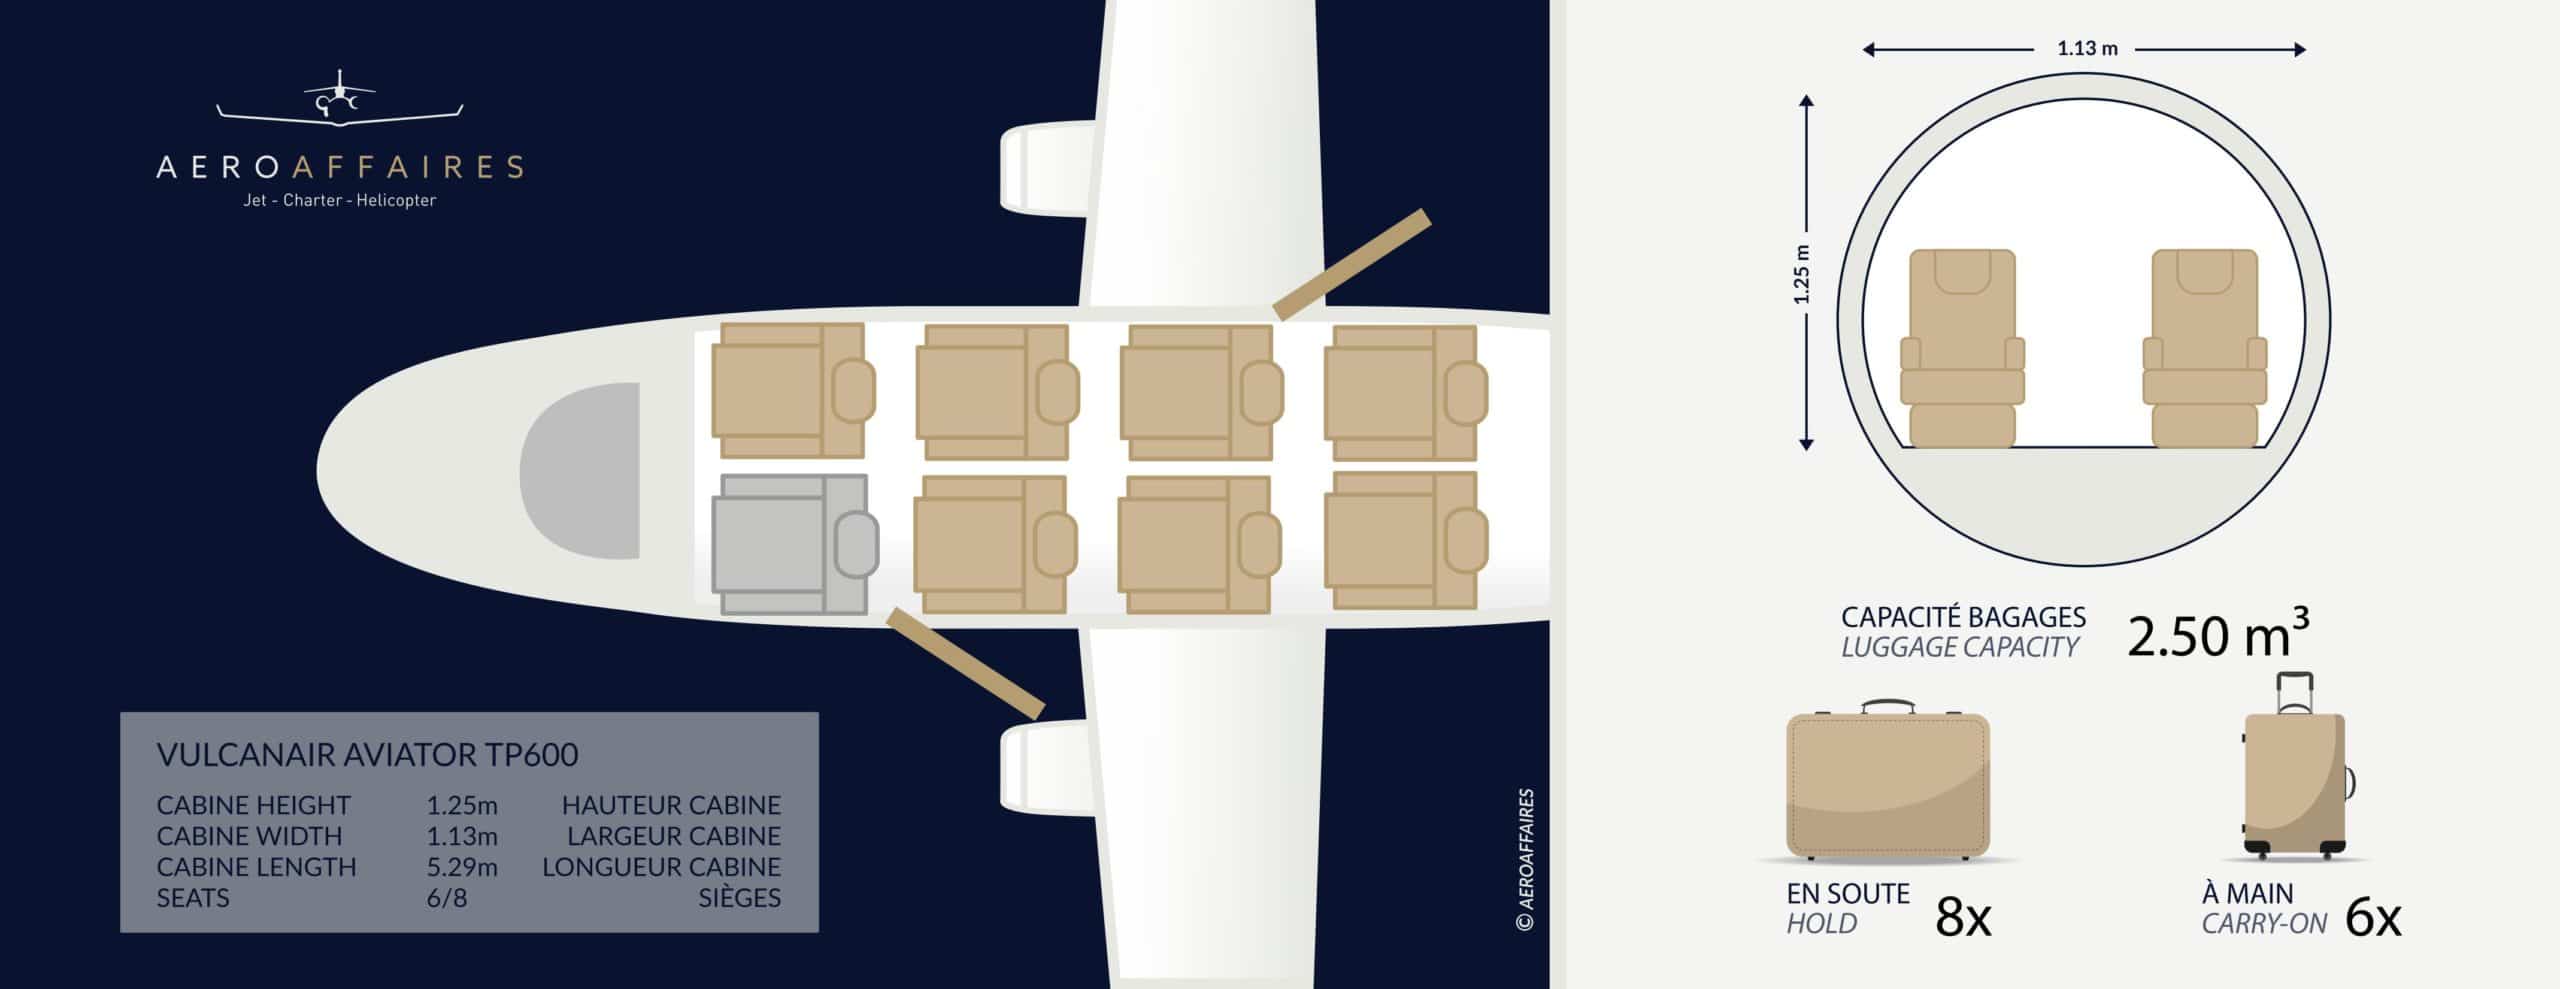 Plan intérieur jet privé Vulcanair Aviator TP600